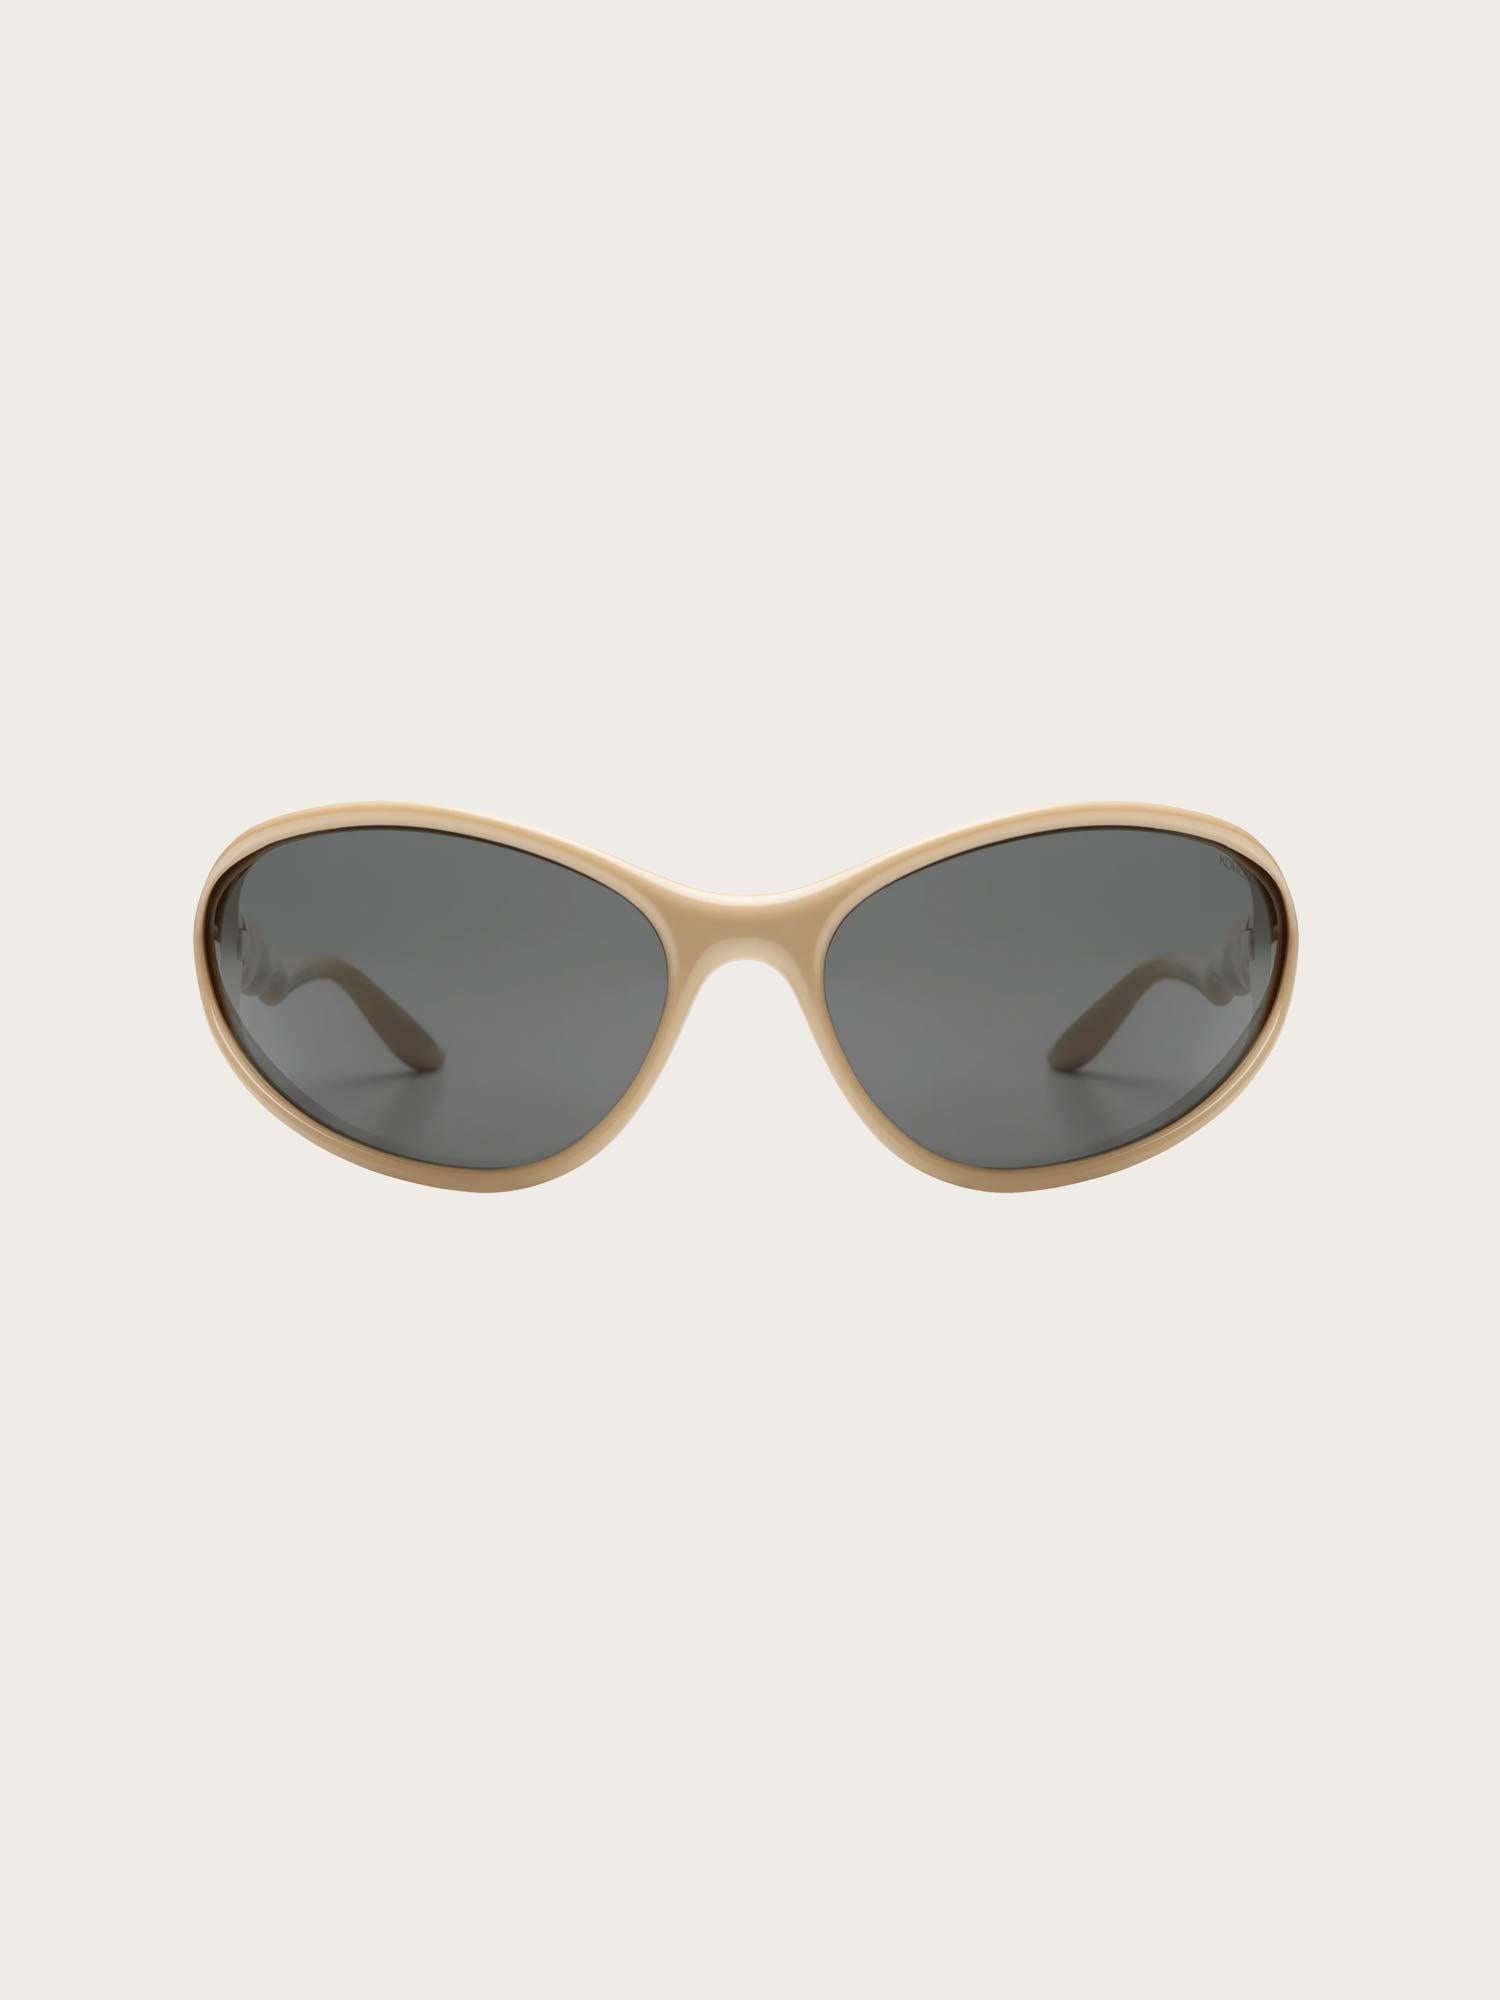 The Glitch Sunglasses - Almond